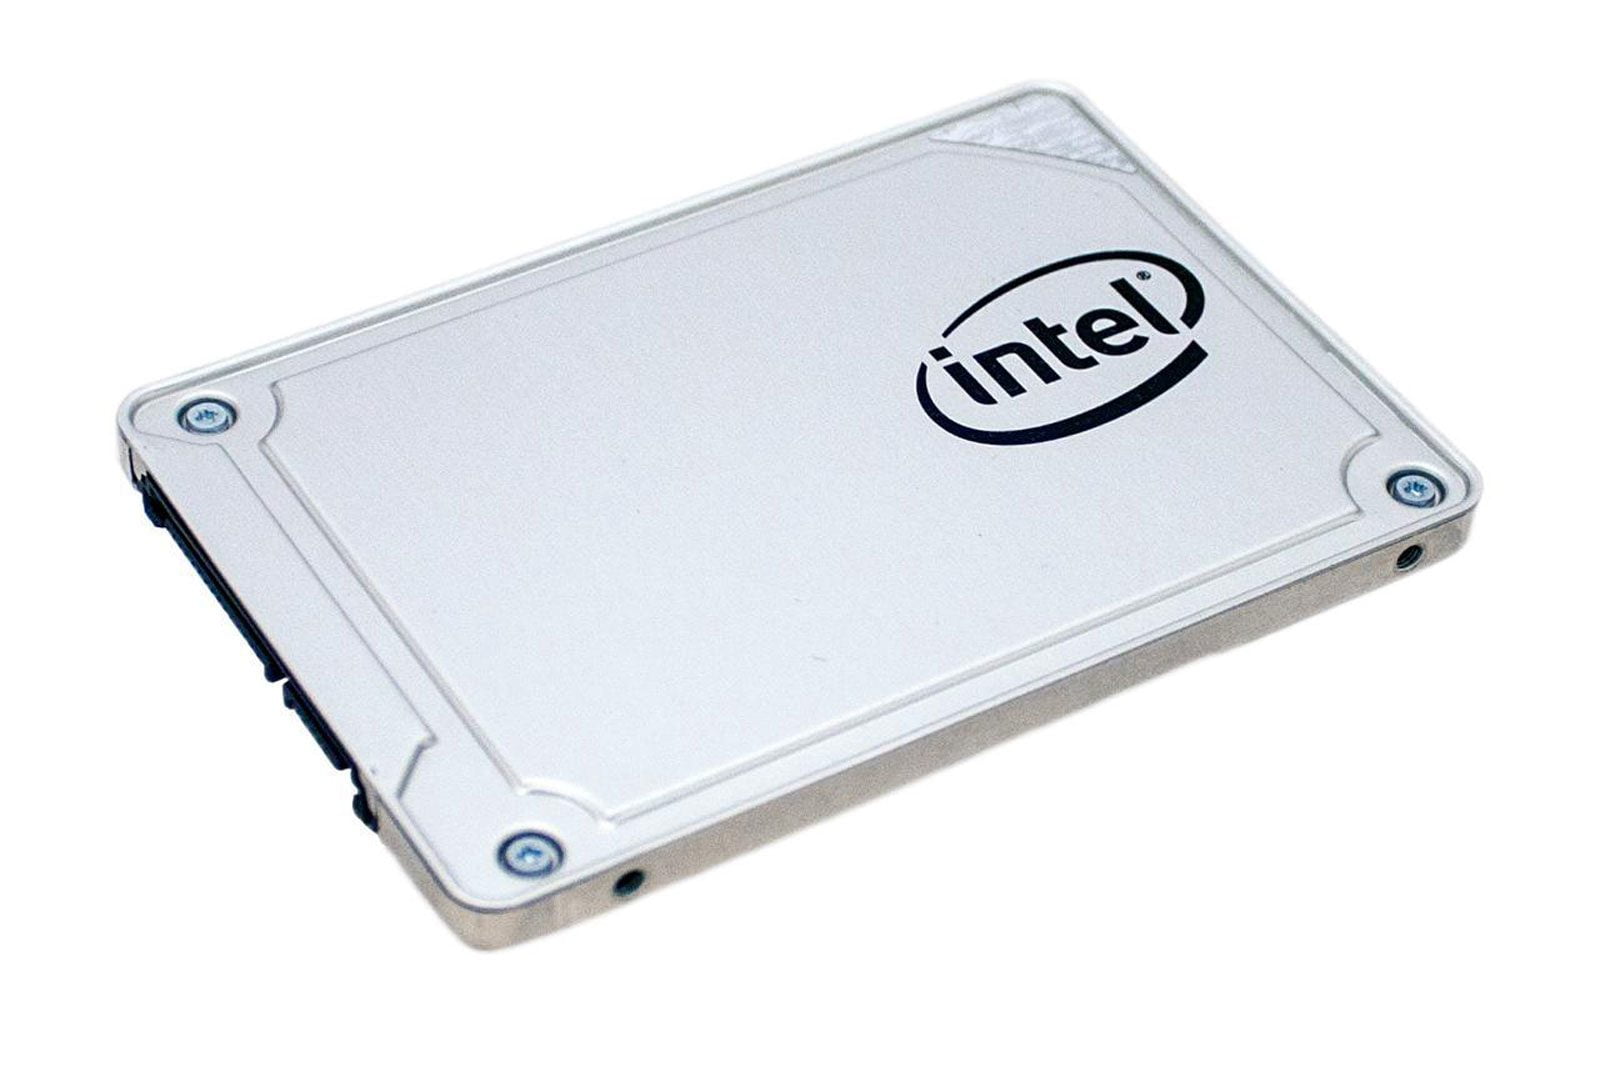 Intel 545s 256GB